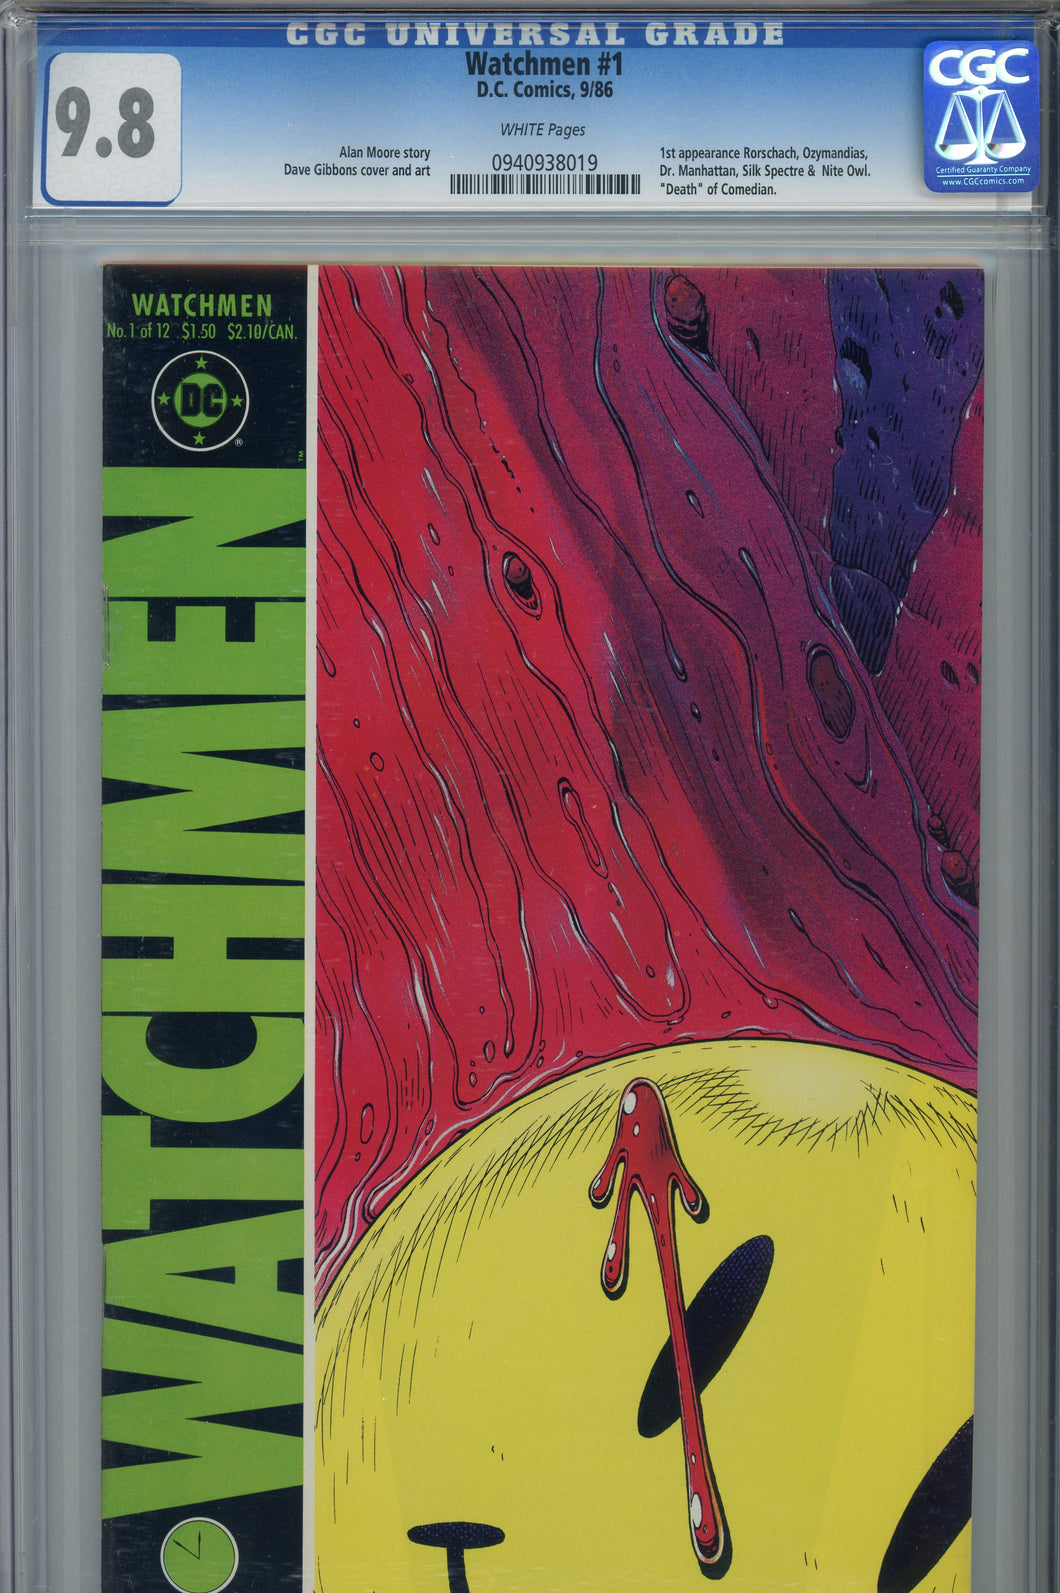 1986 Watchmen #1 CGC 9.8